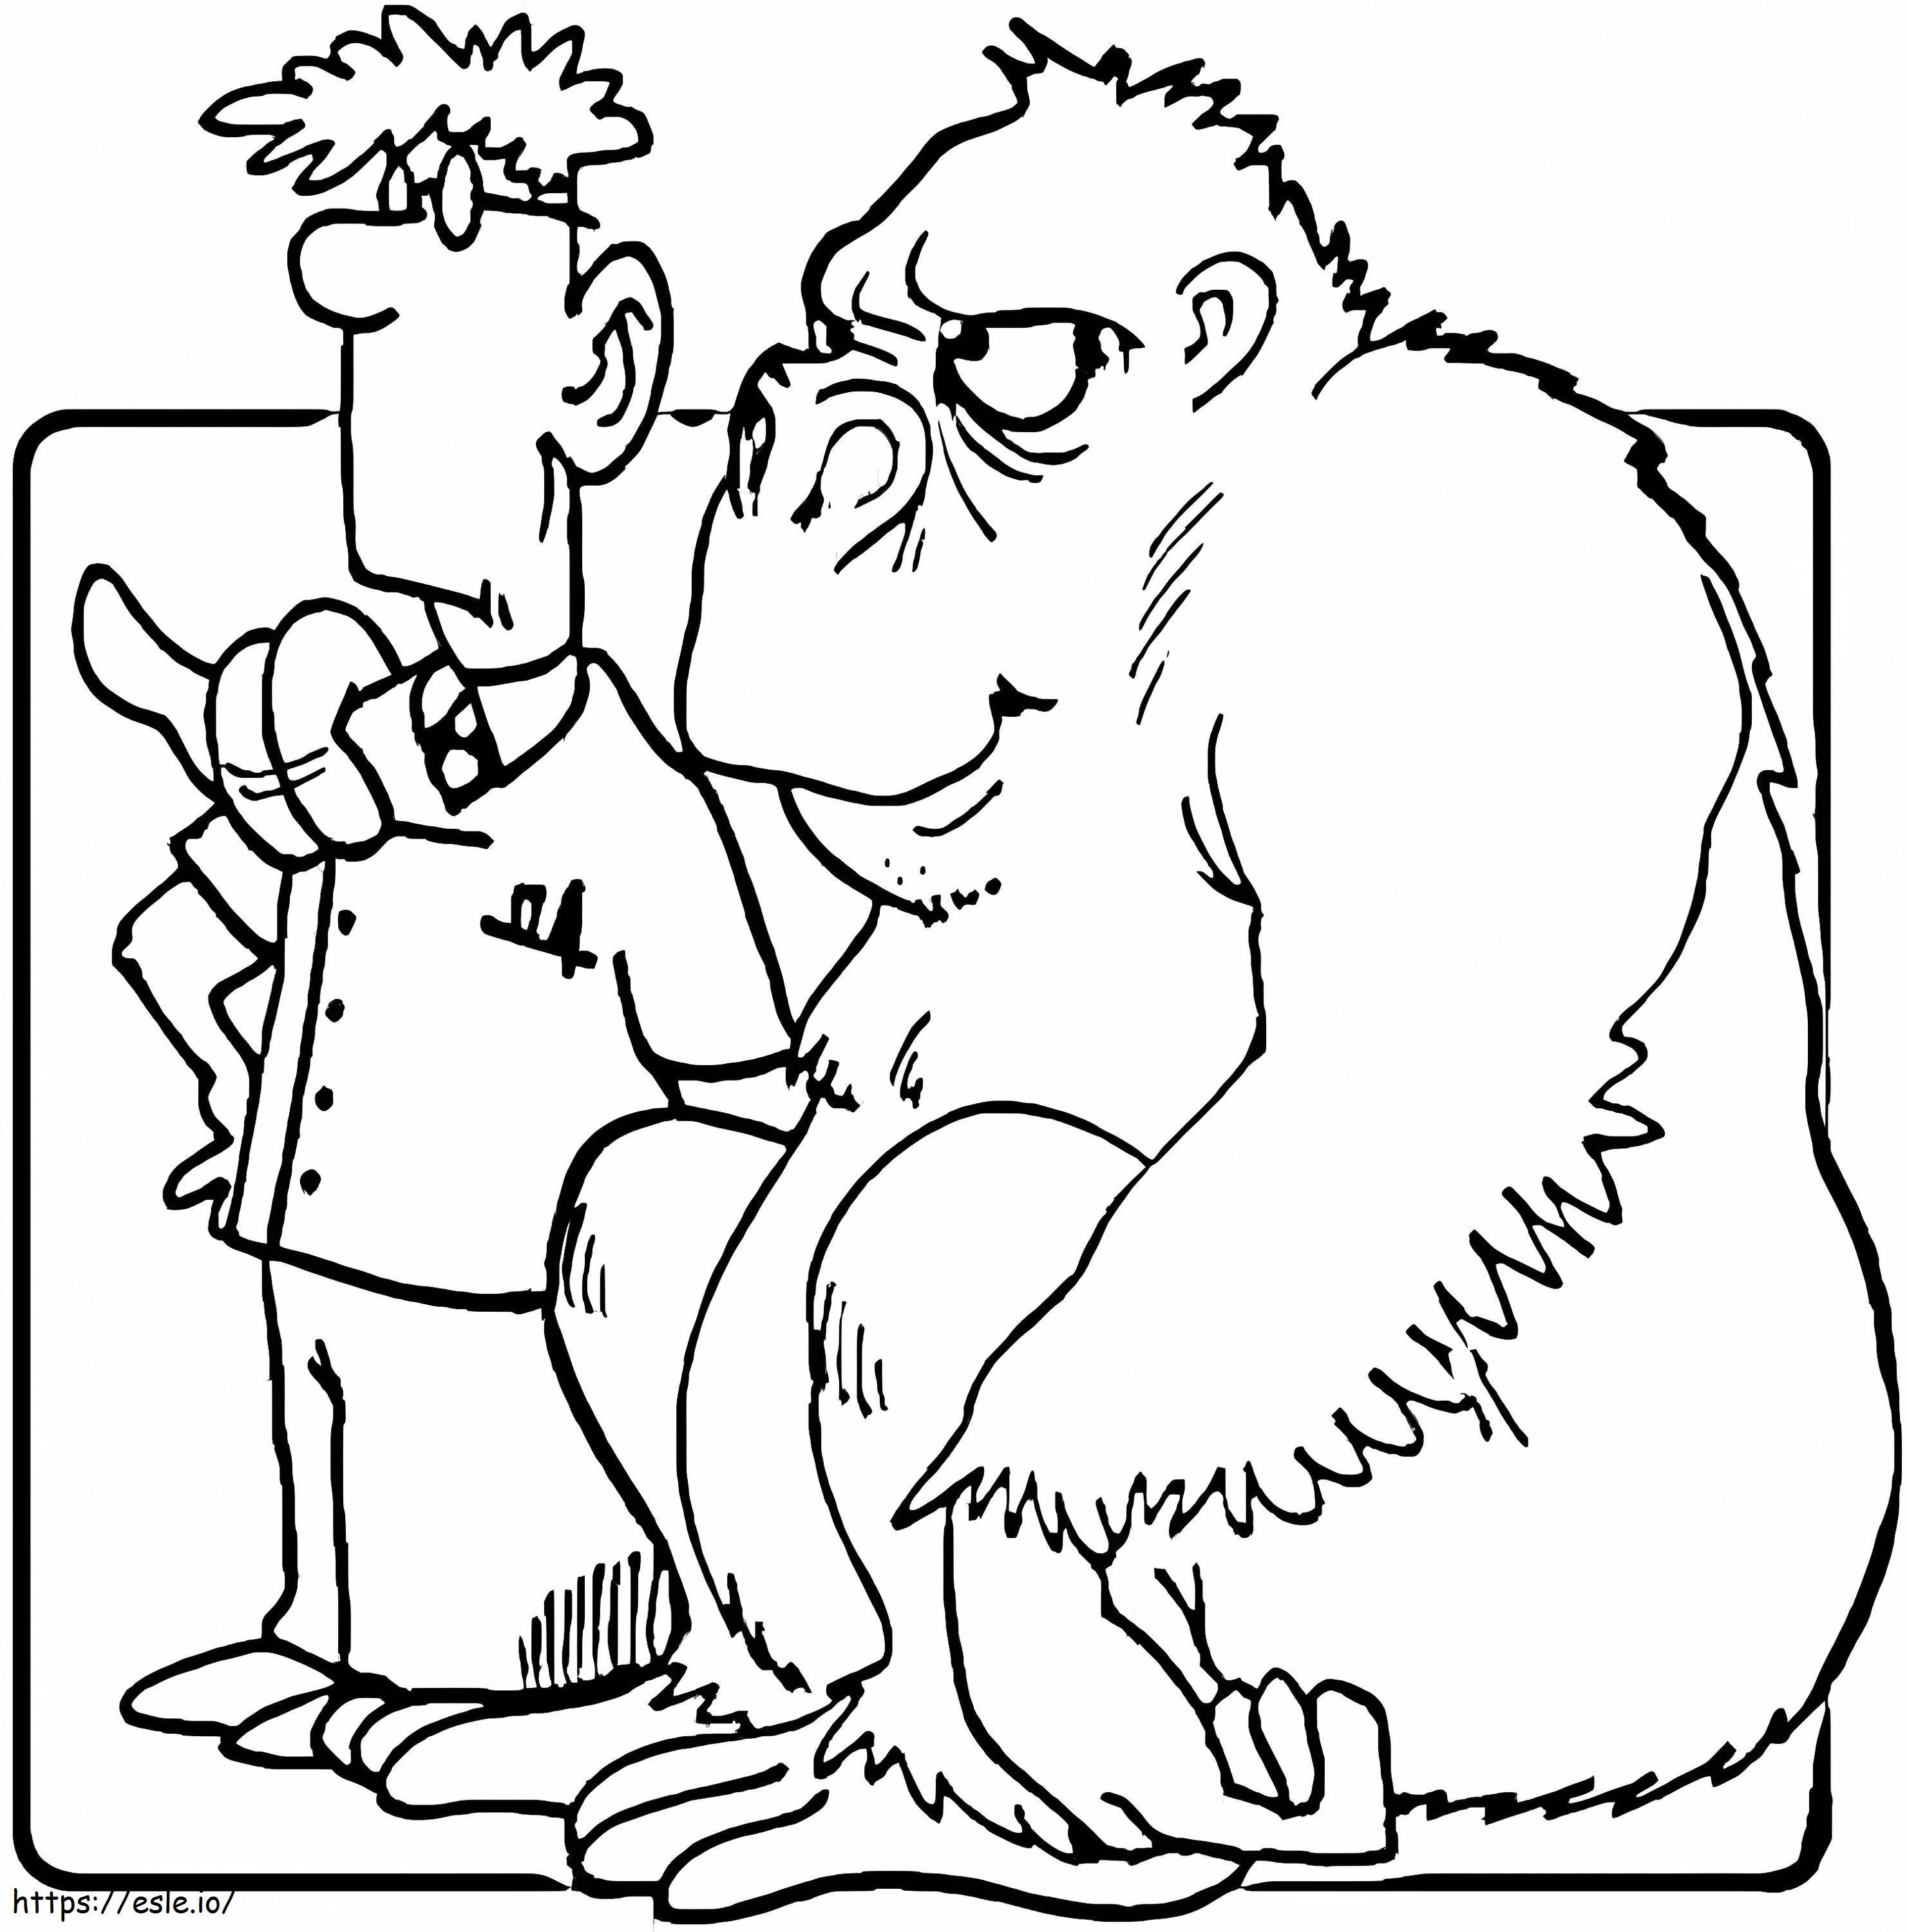 Veterinarian And Gorilla coloring page